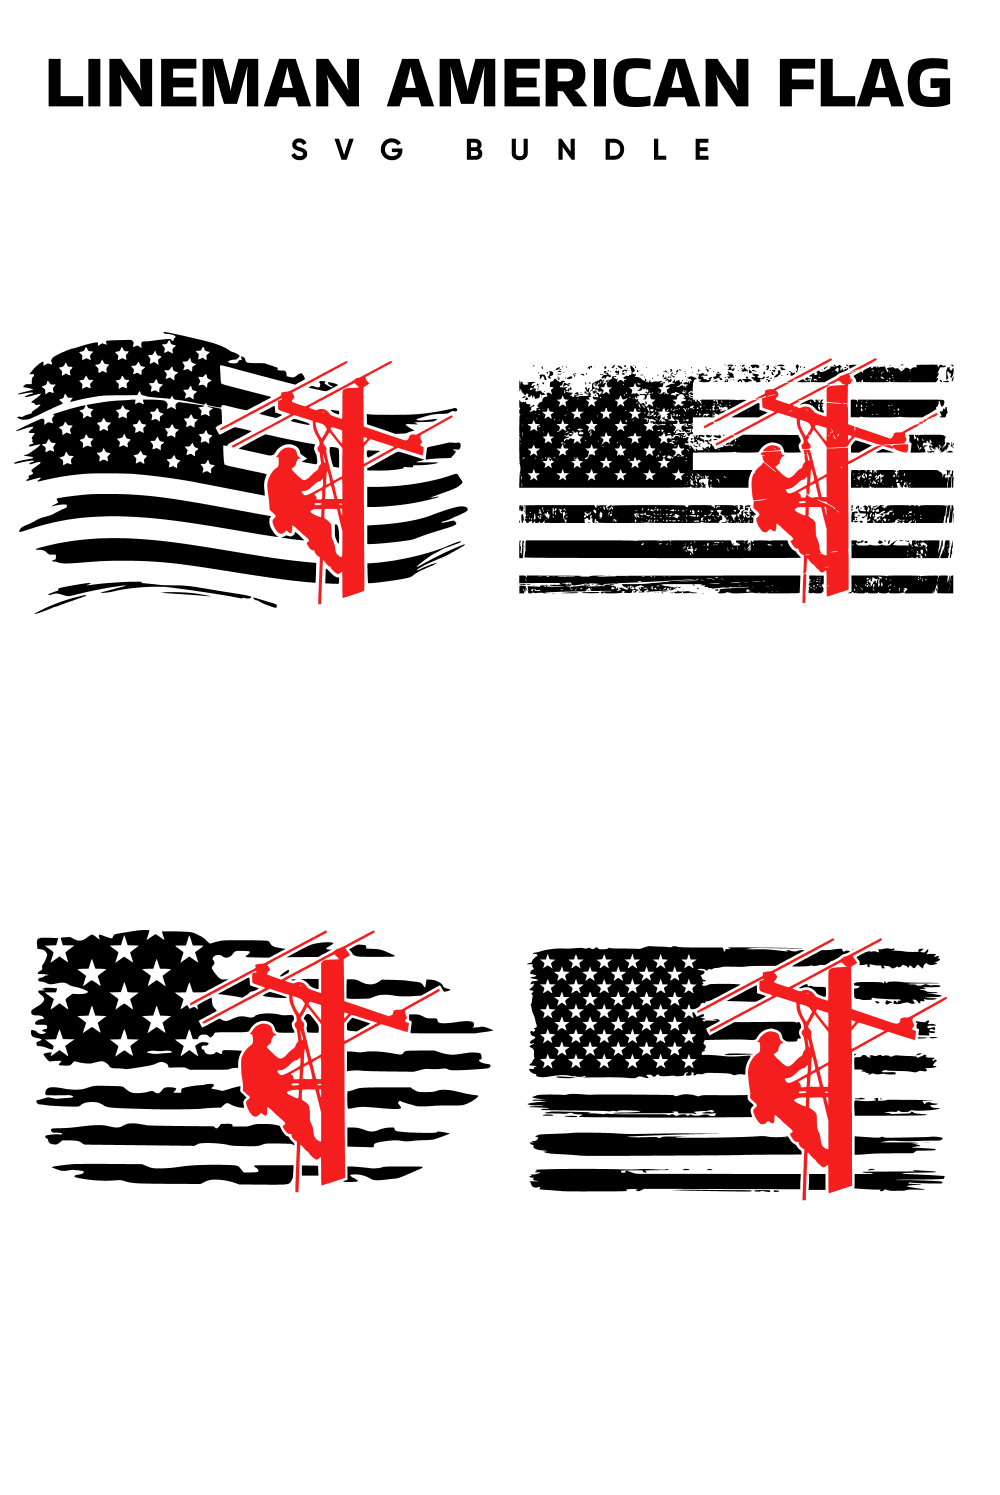 Lineman American Flag Svg - Pinterest.